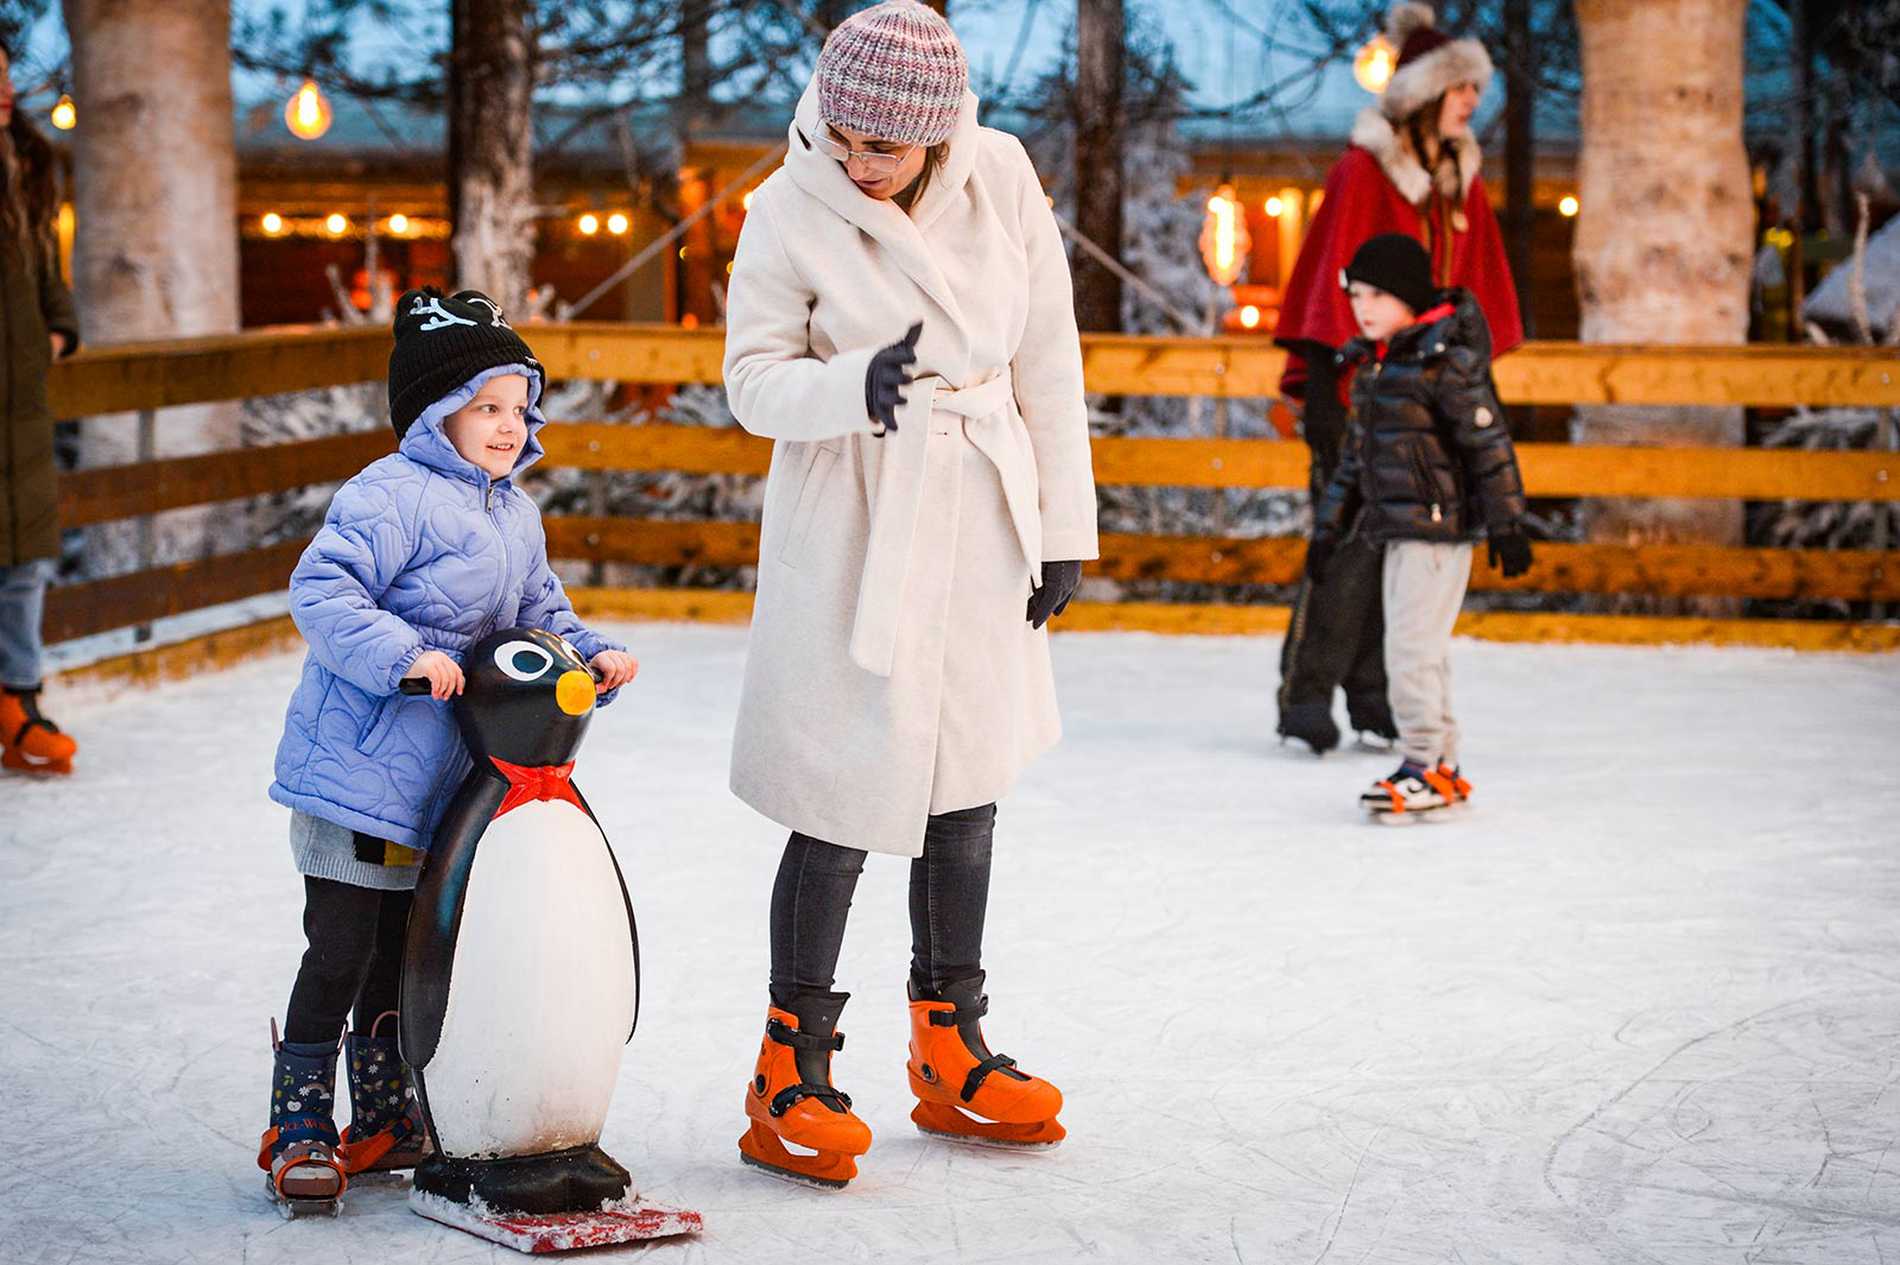 Julia holding onto a penguin stabiliser while she ice skates with mum.